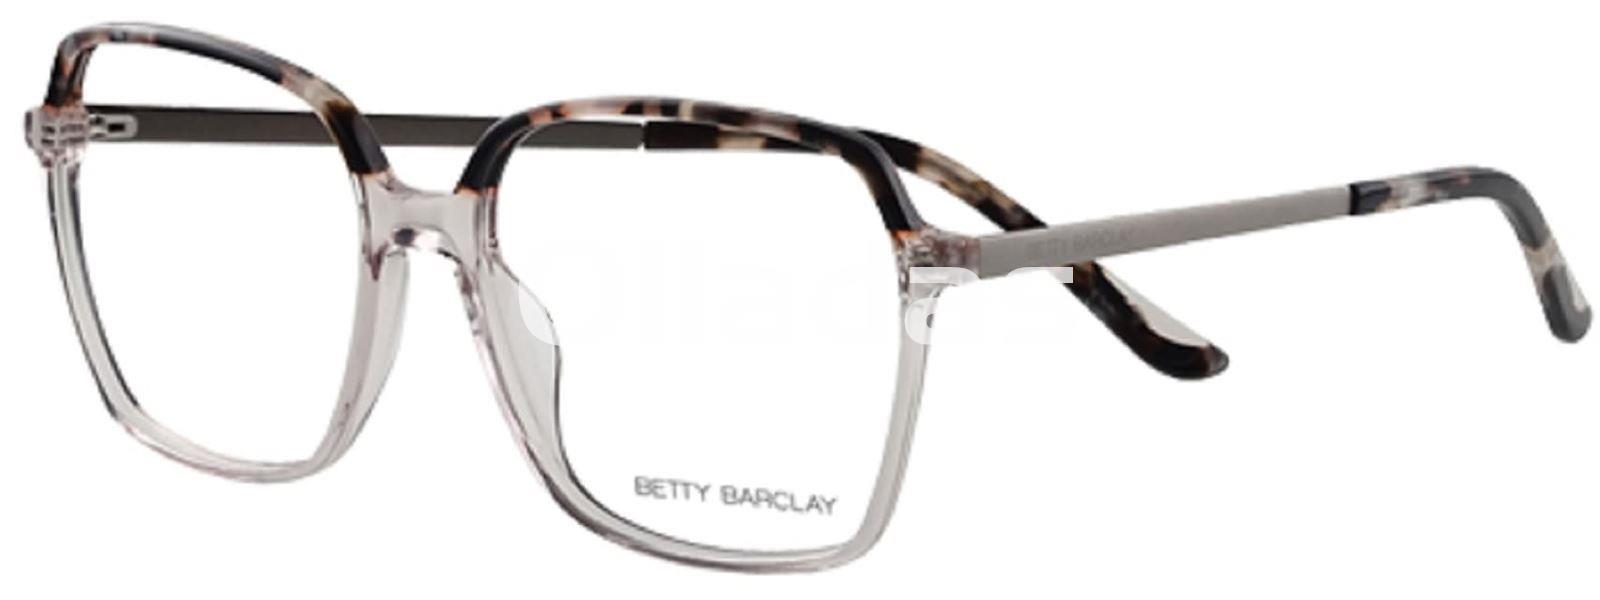 Betty Barclay 51178. - Imagen 1